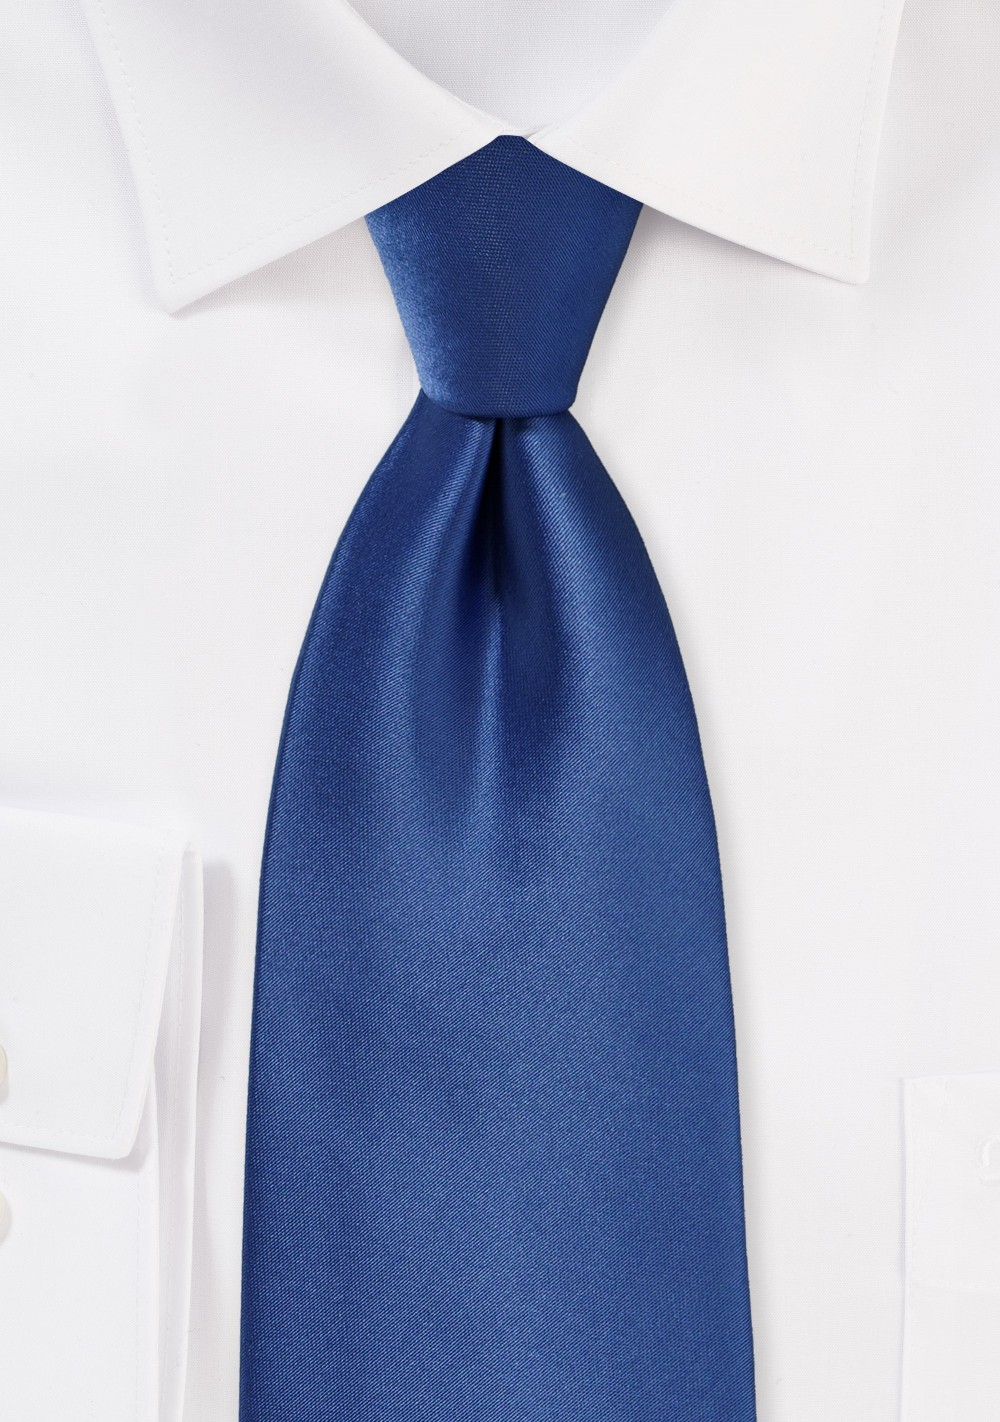 Solid Cobalt Blue Necktie